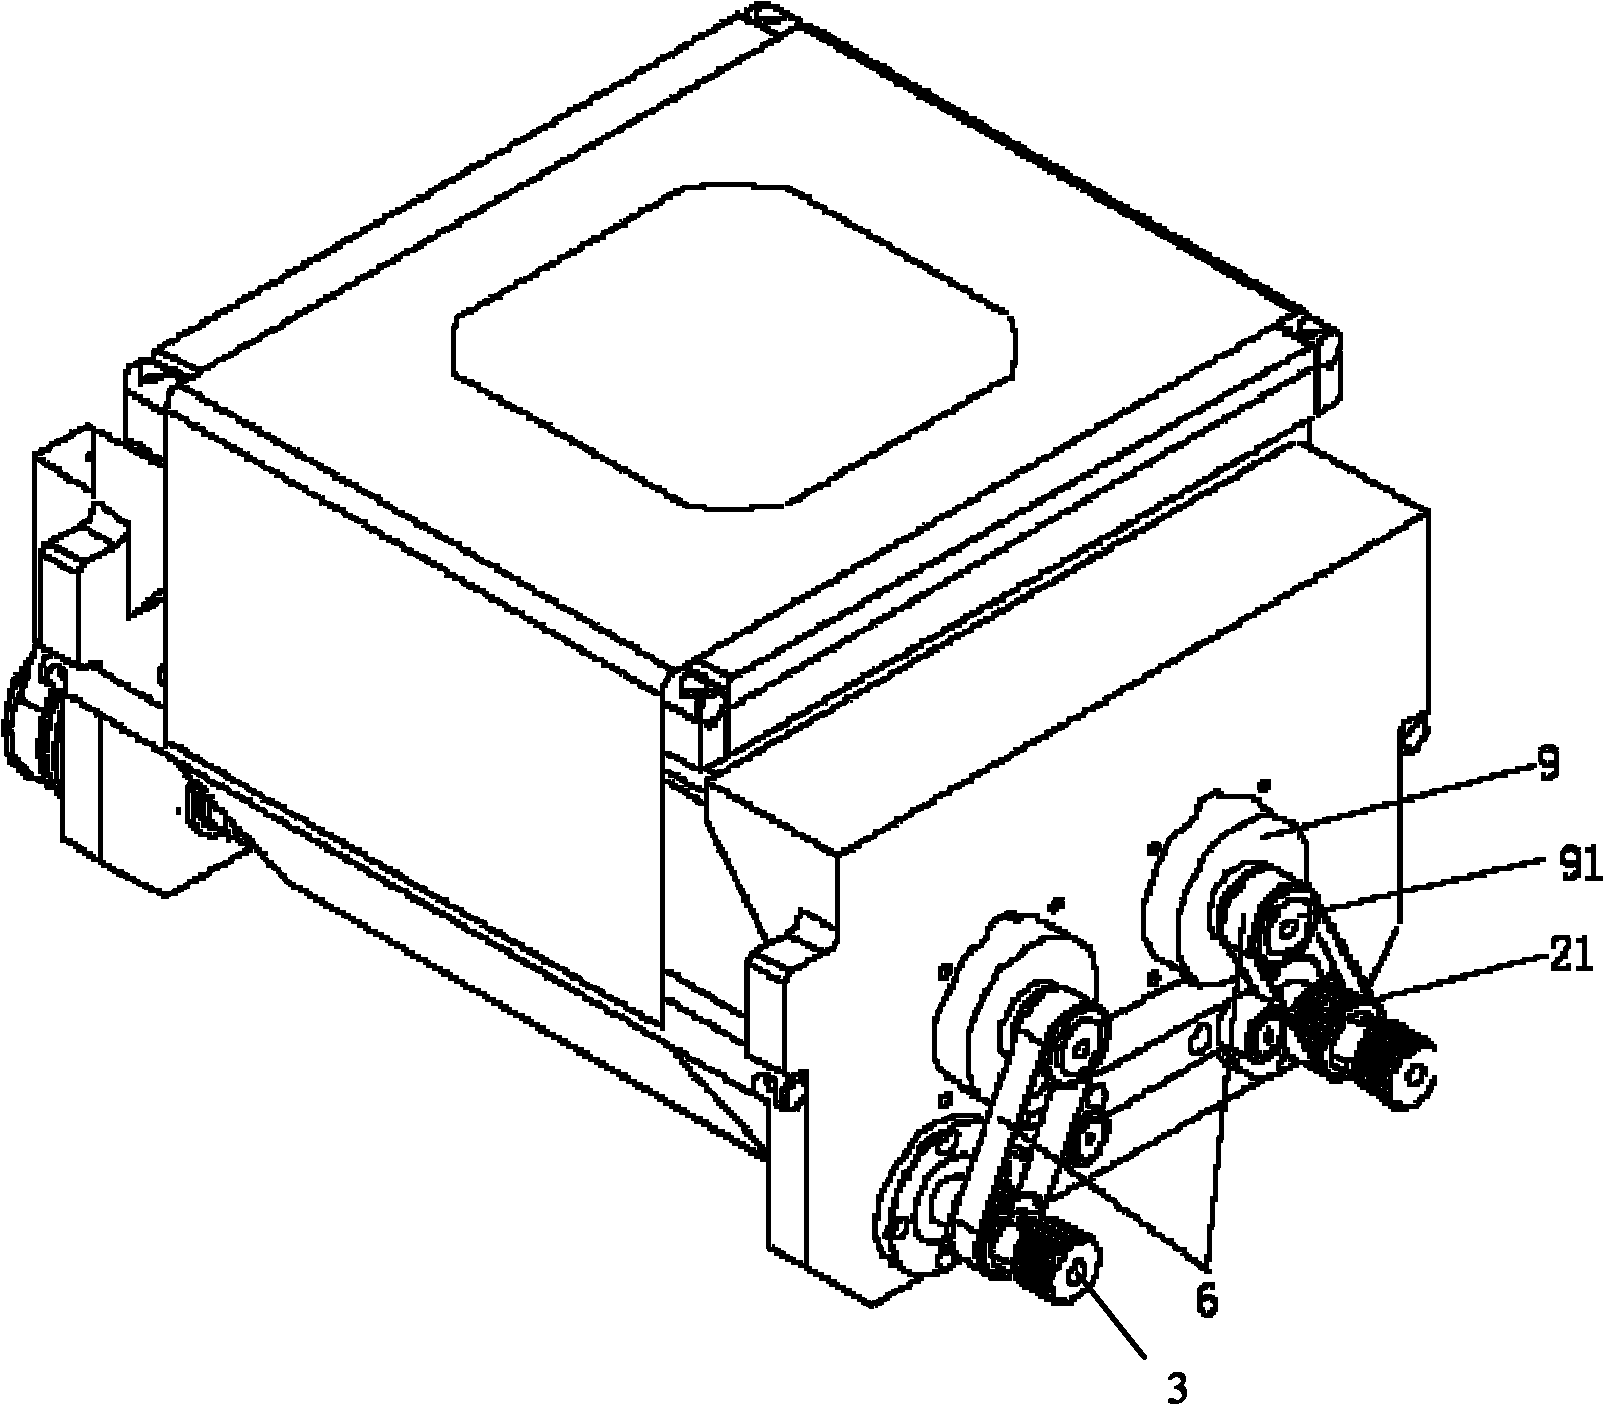 Transmitting method and device of solar battery slice